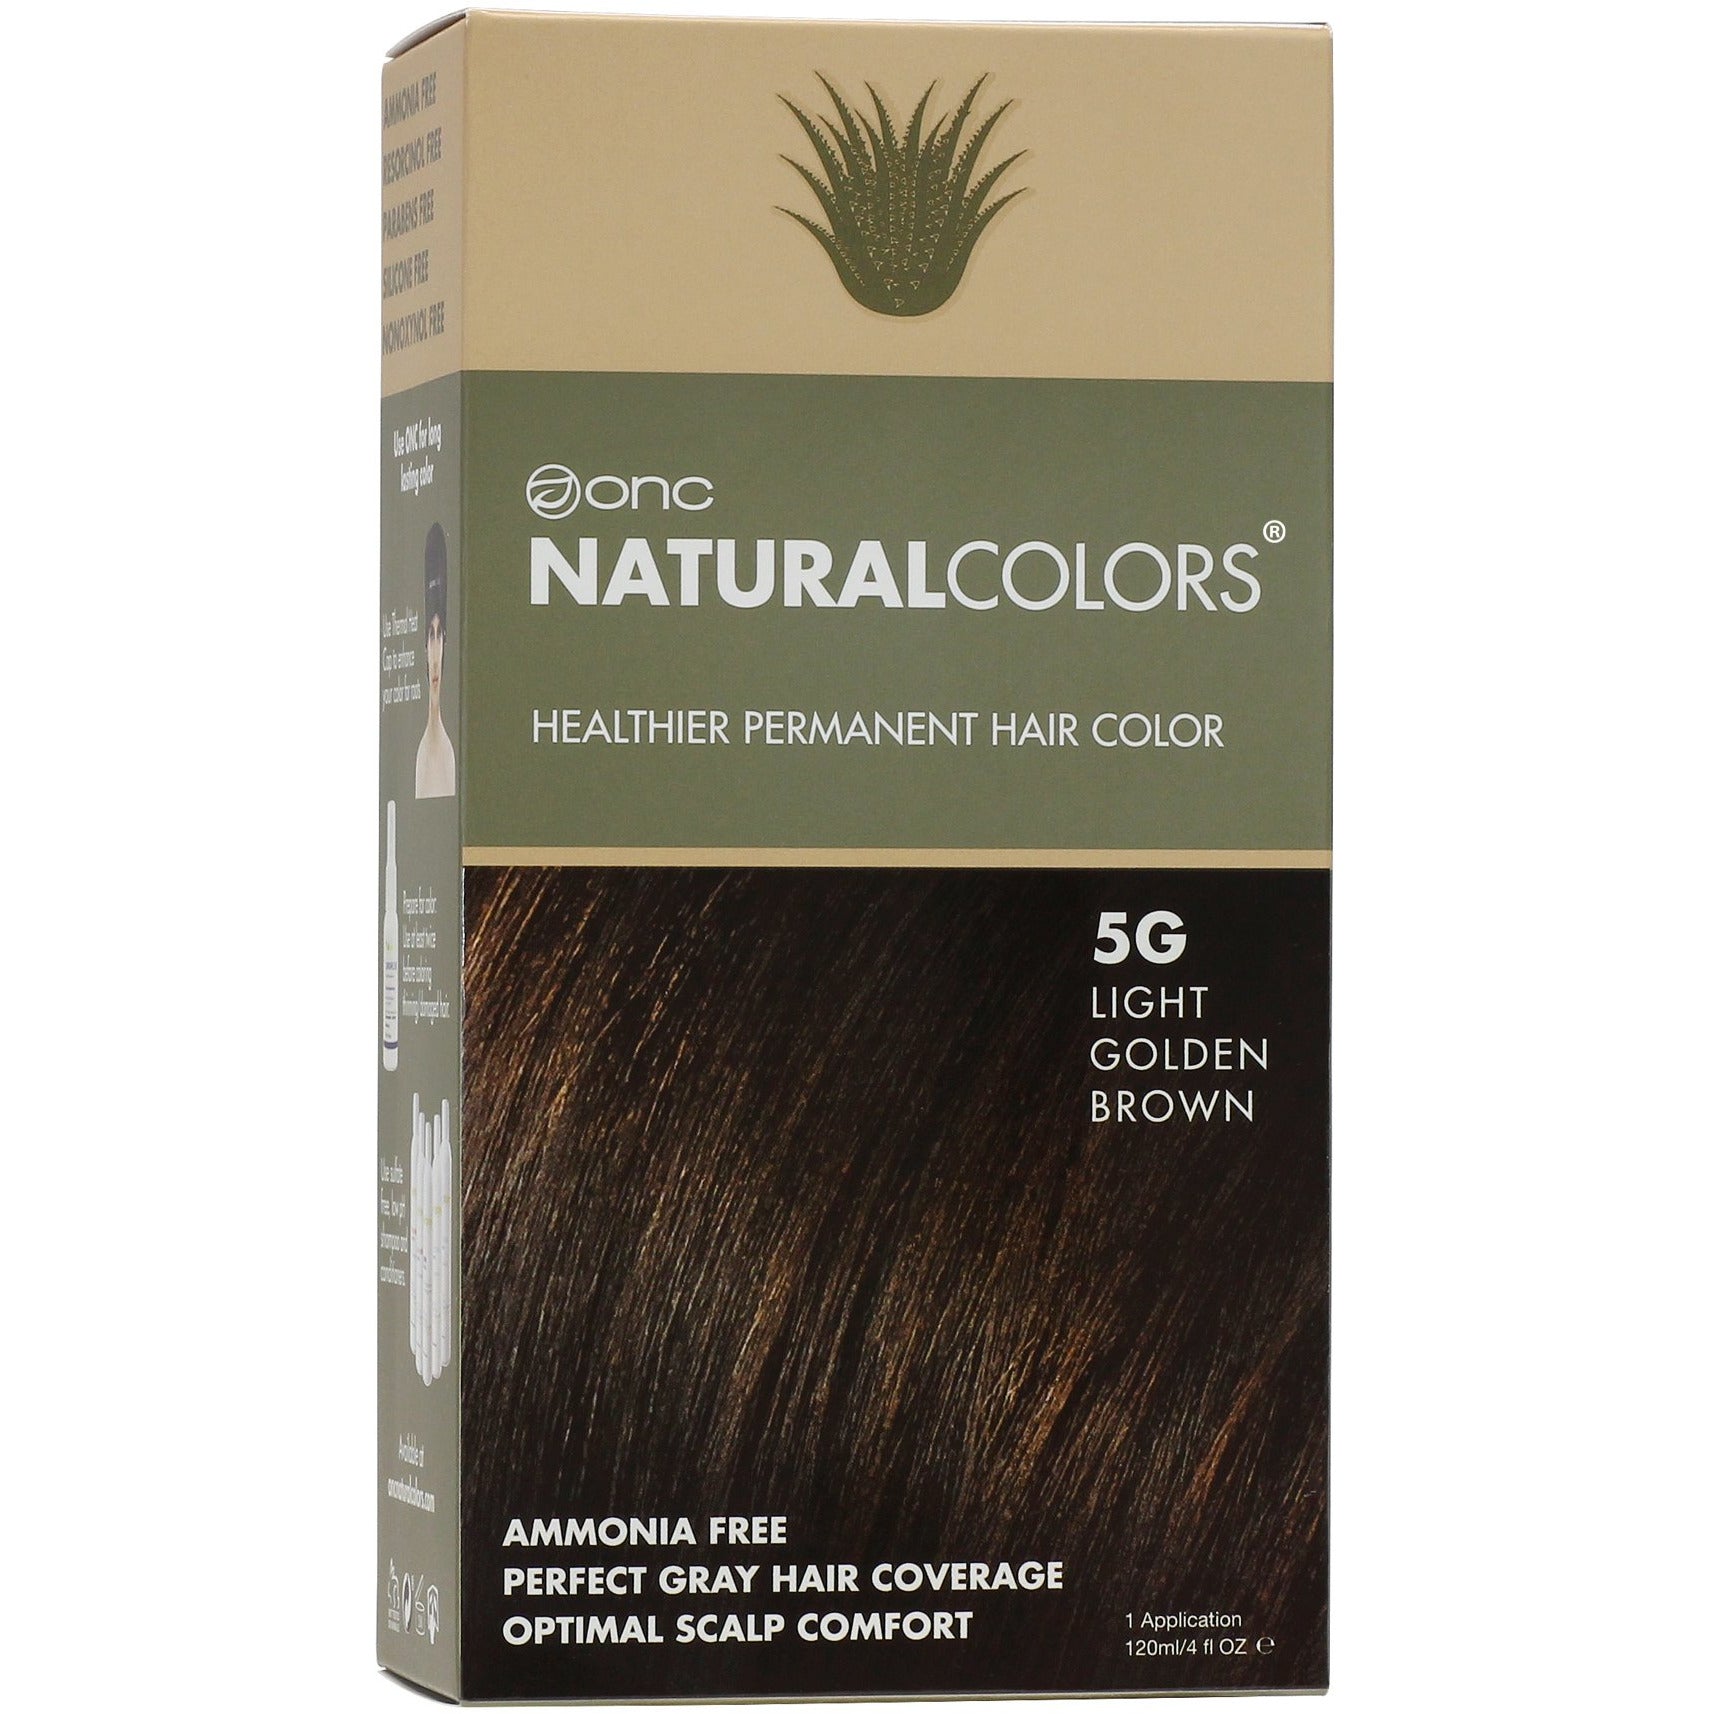 5G Light Golden Brown Heat Activated Hair Dye With Organic Ingredients - 120 ml (4 fl. oz)